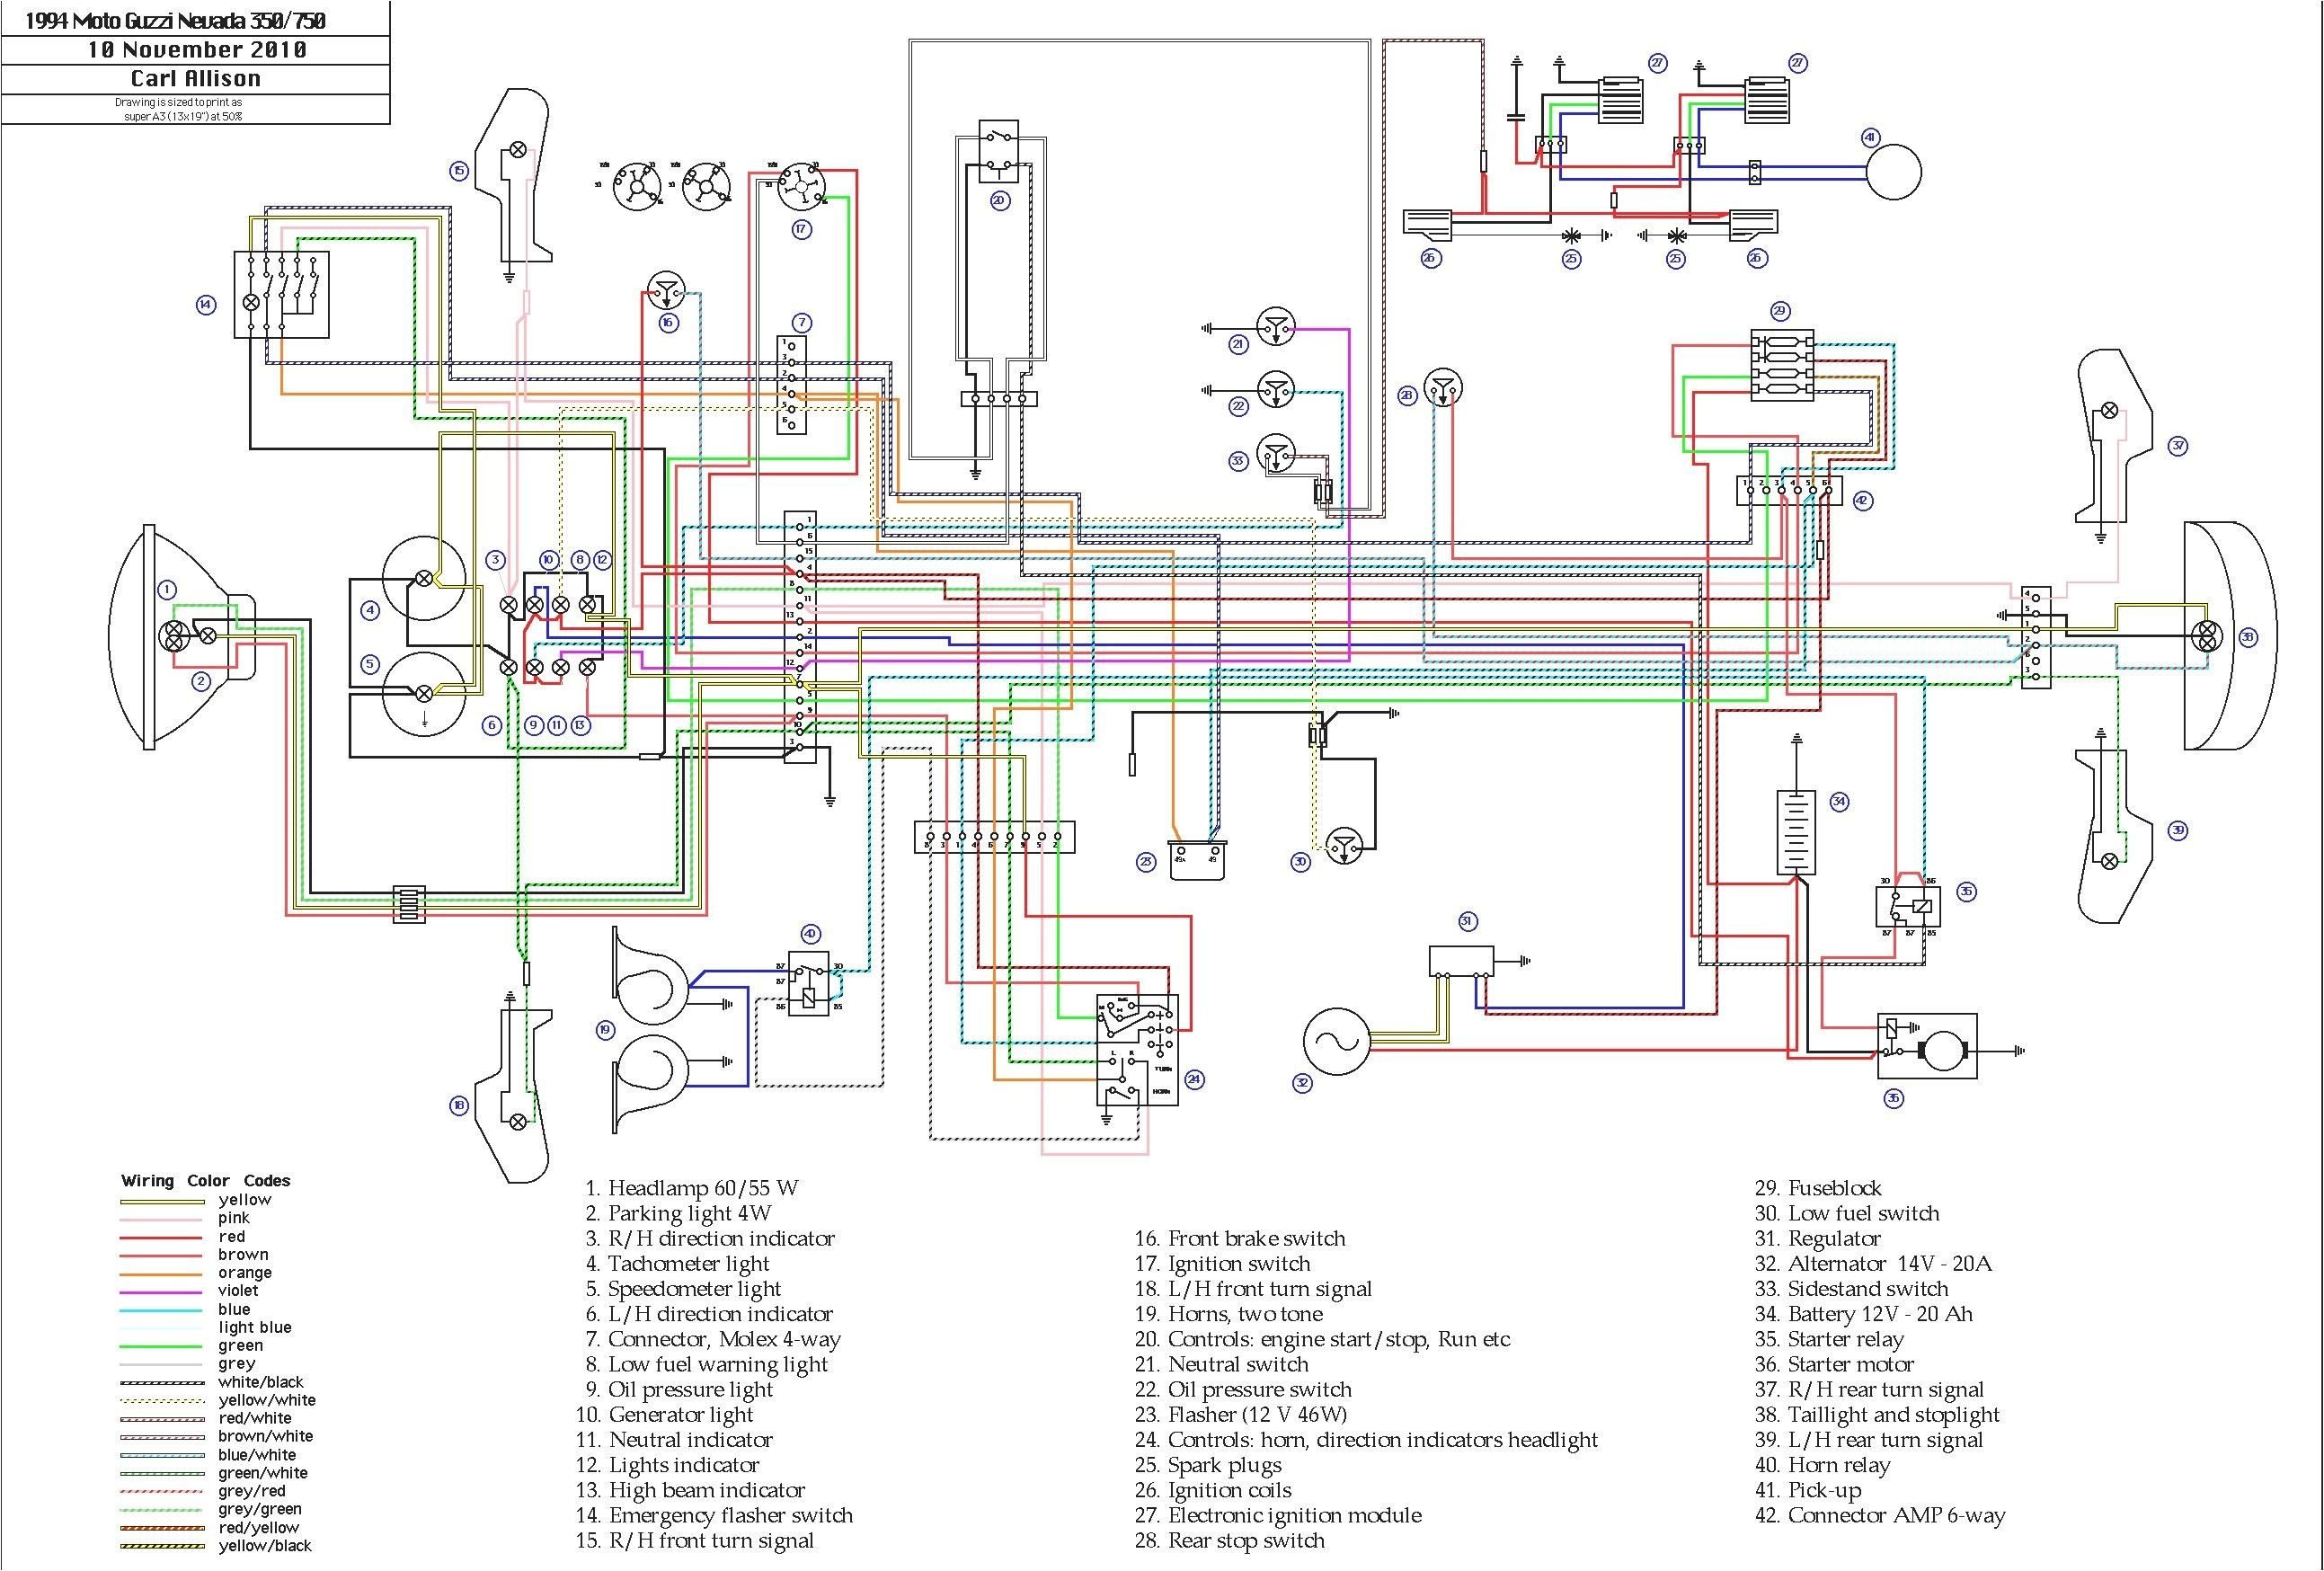 fm 350 wiring diagram wiring diagram sortfm 350 wiring diagram wiring diagram view cat 5 cable